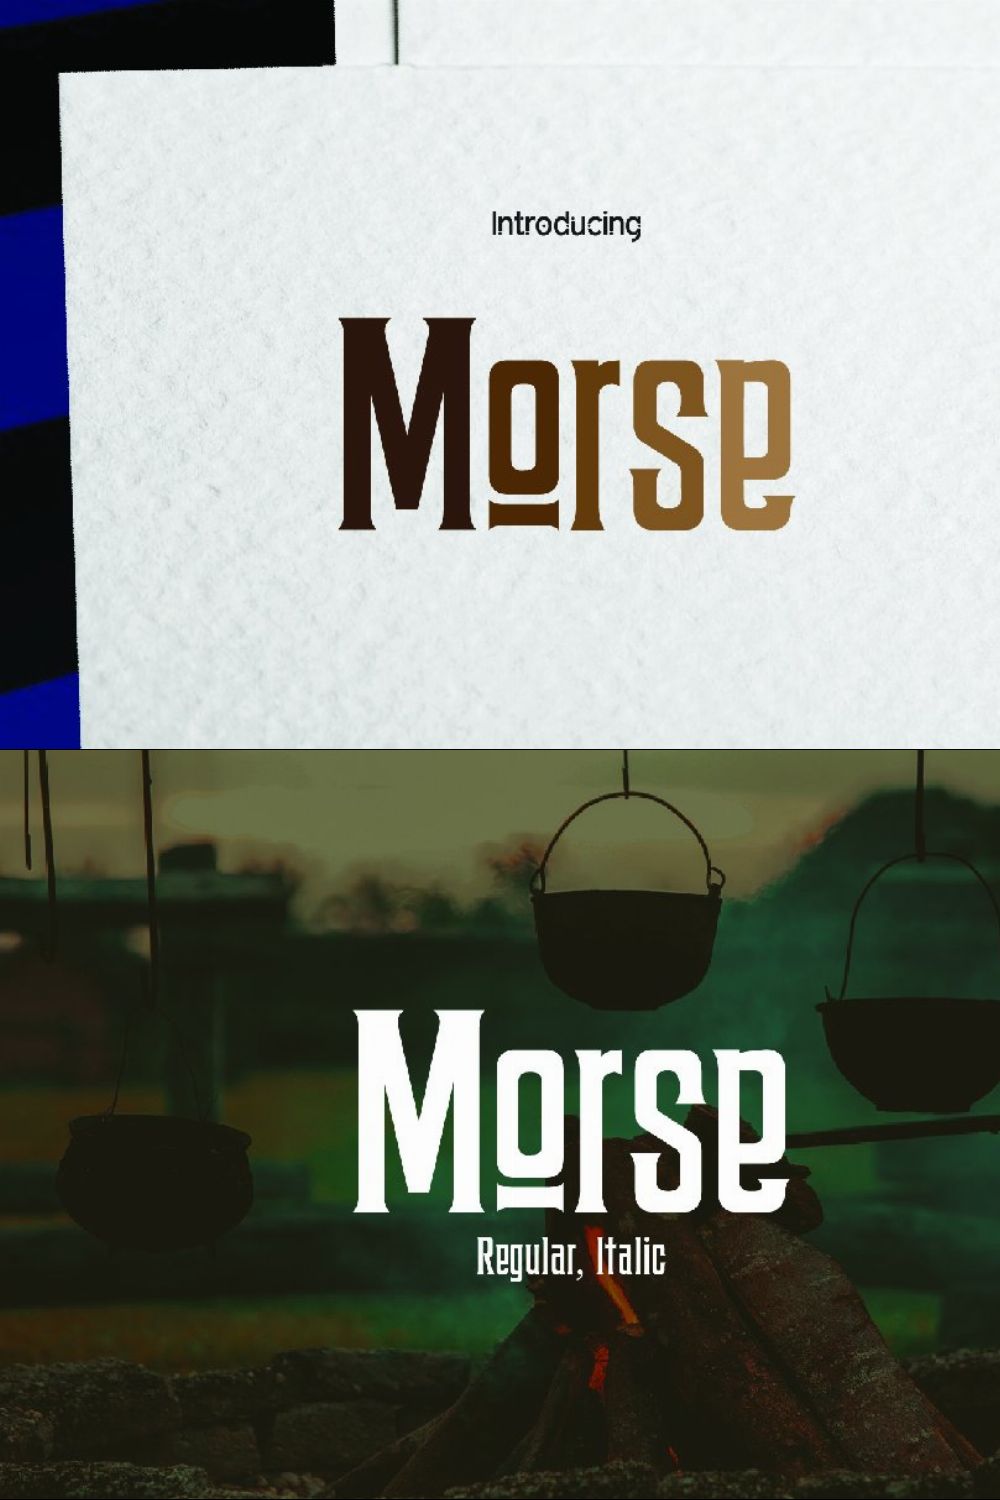 Morse pinterest preview image.